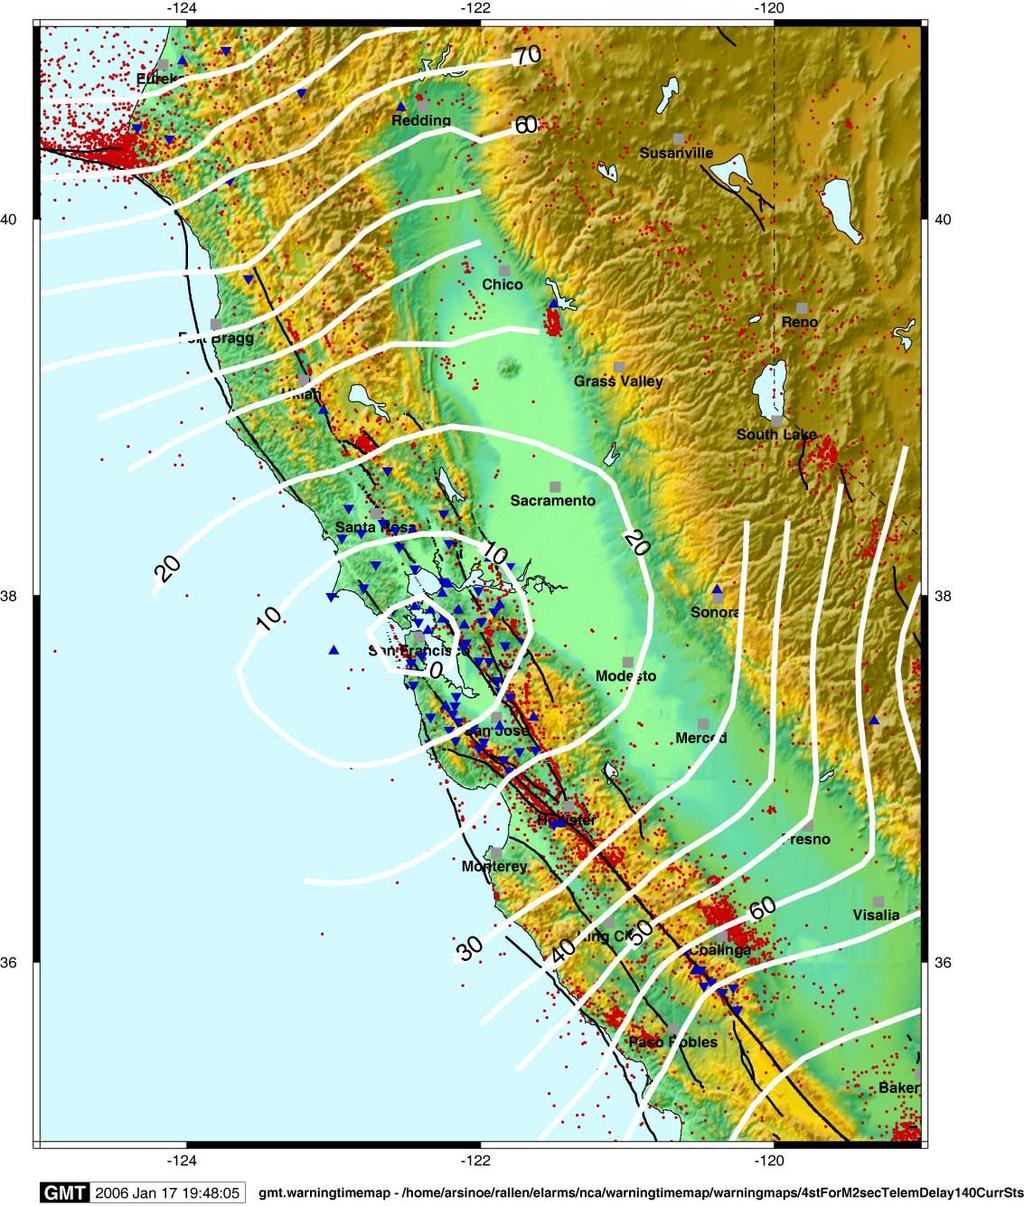 Warning times for San Francisco Range of warning times: 0 to 1 min